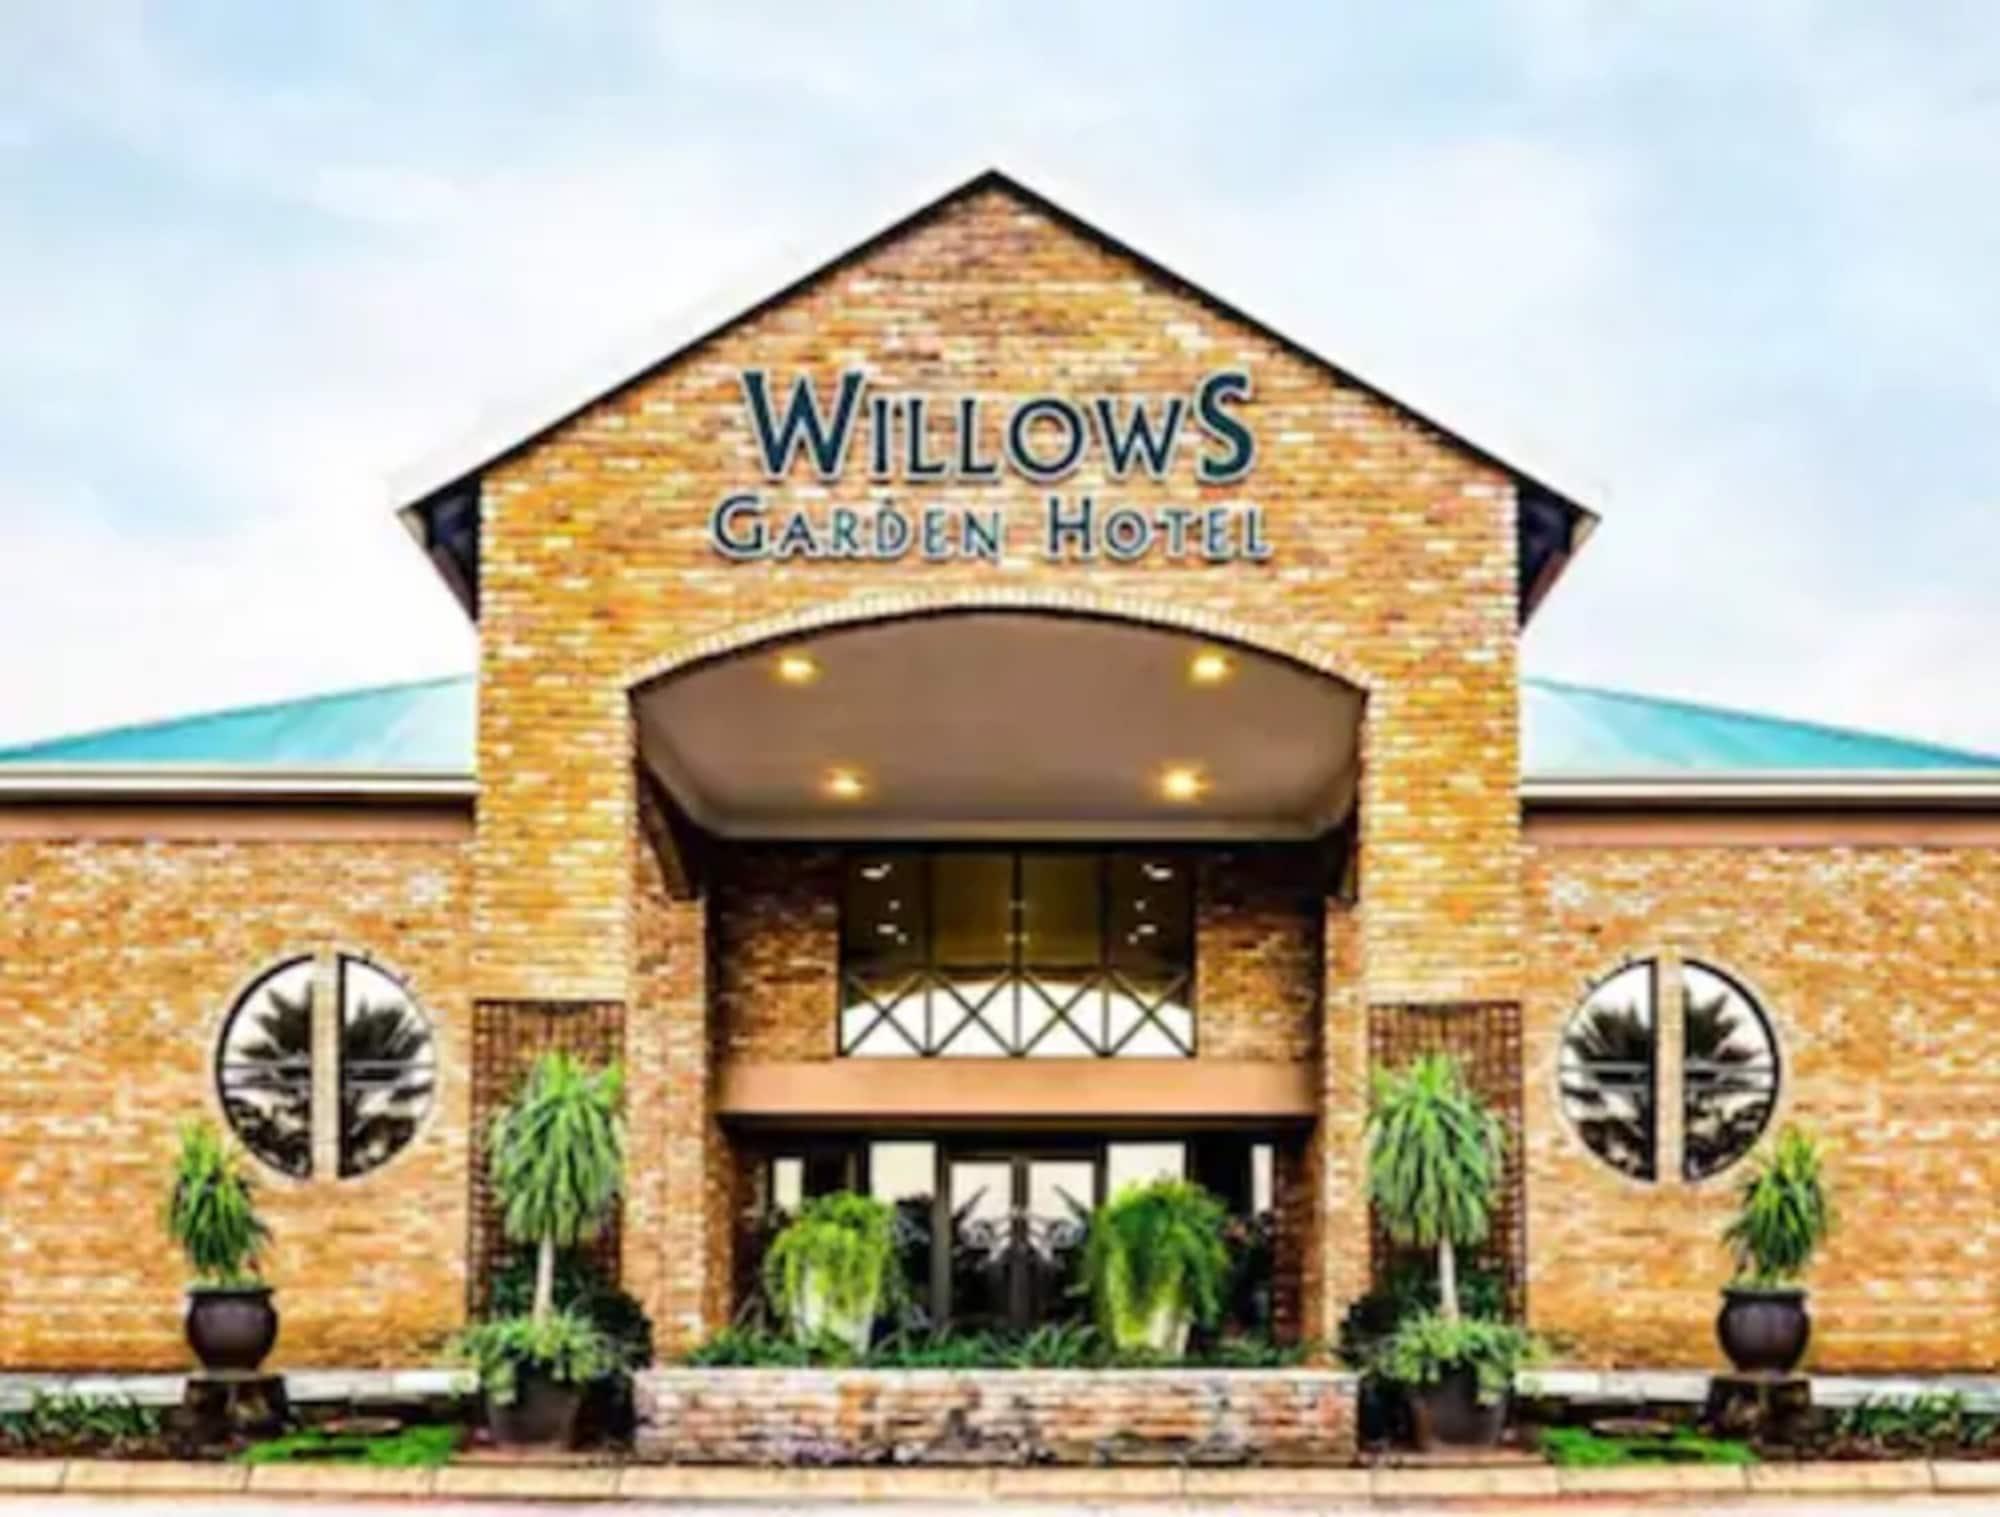 The Willows Garden Hotel image